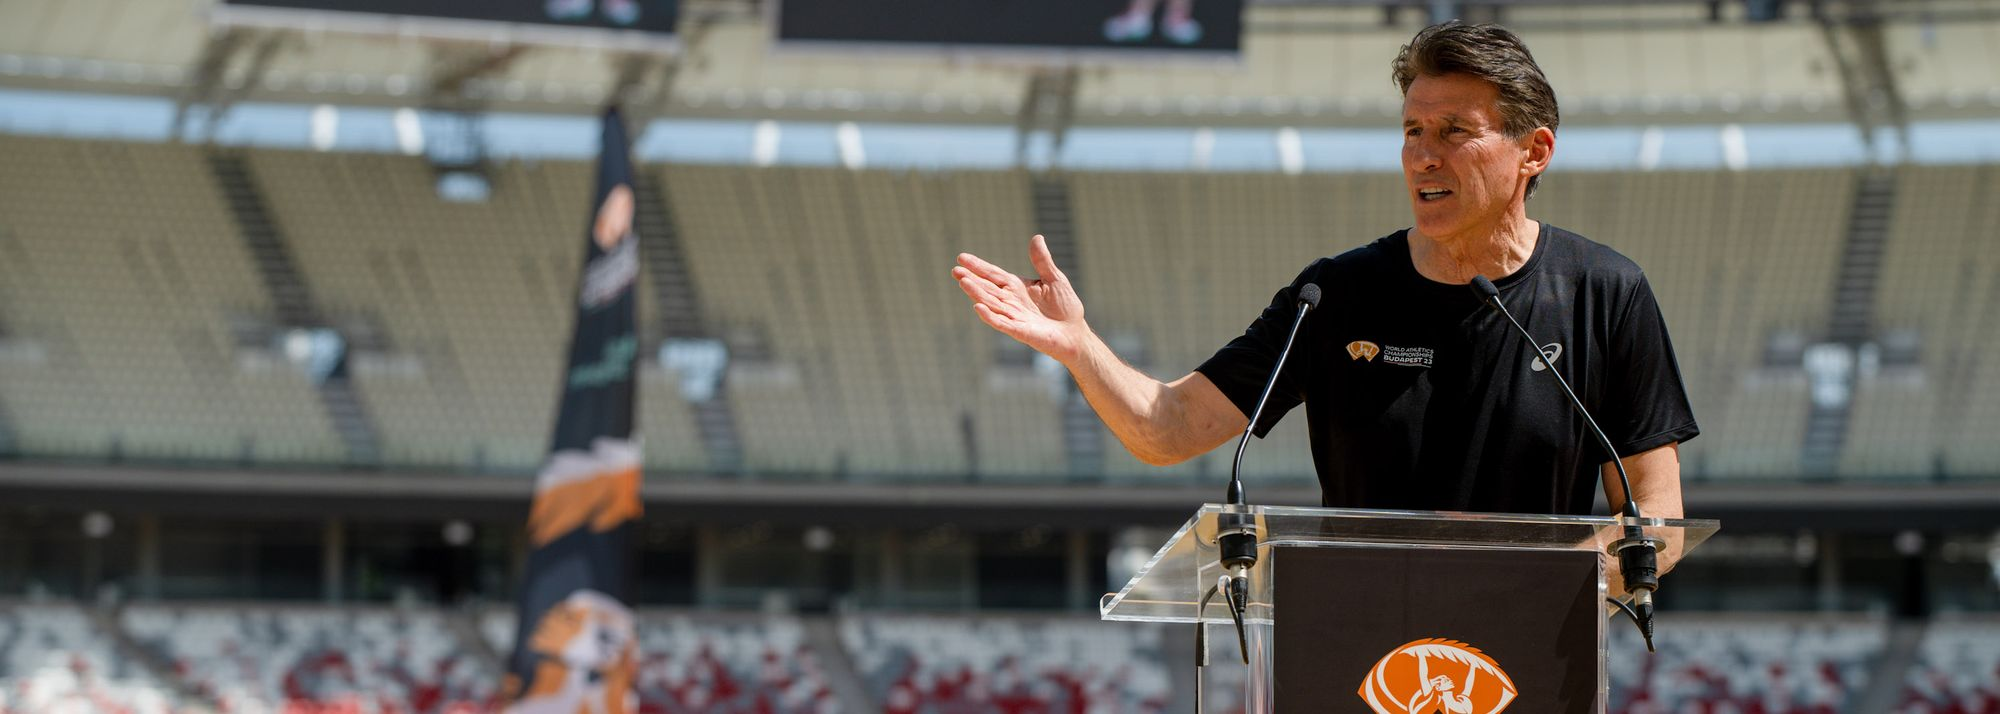 World Athletics President Sebastian Coe is expecting a high-level event in Budapest ©Budapest 2023